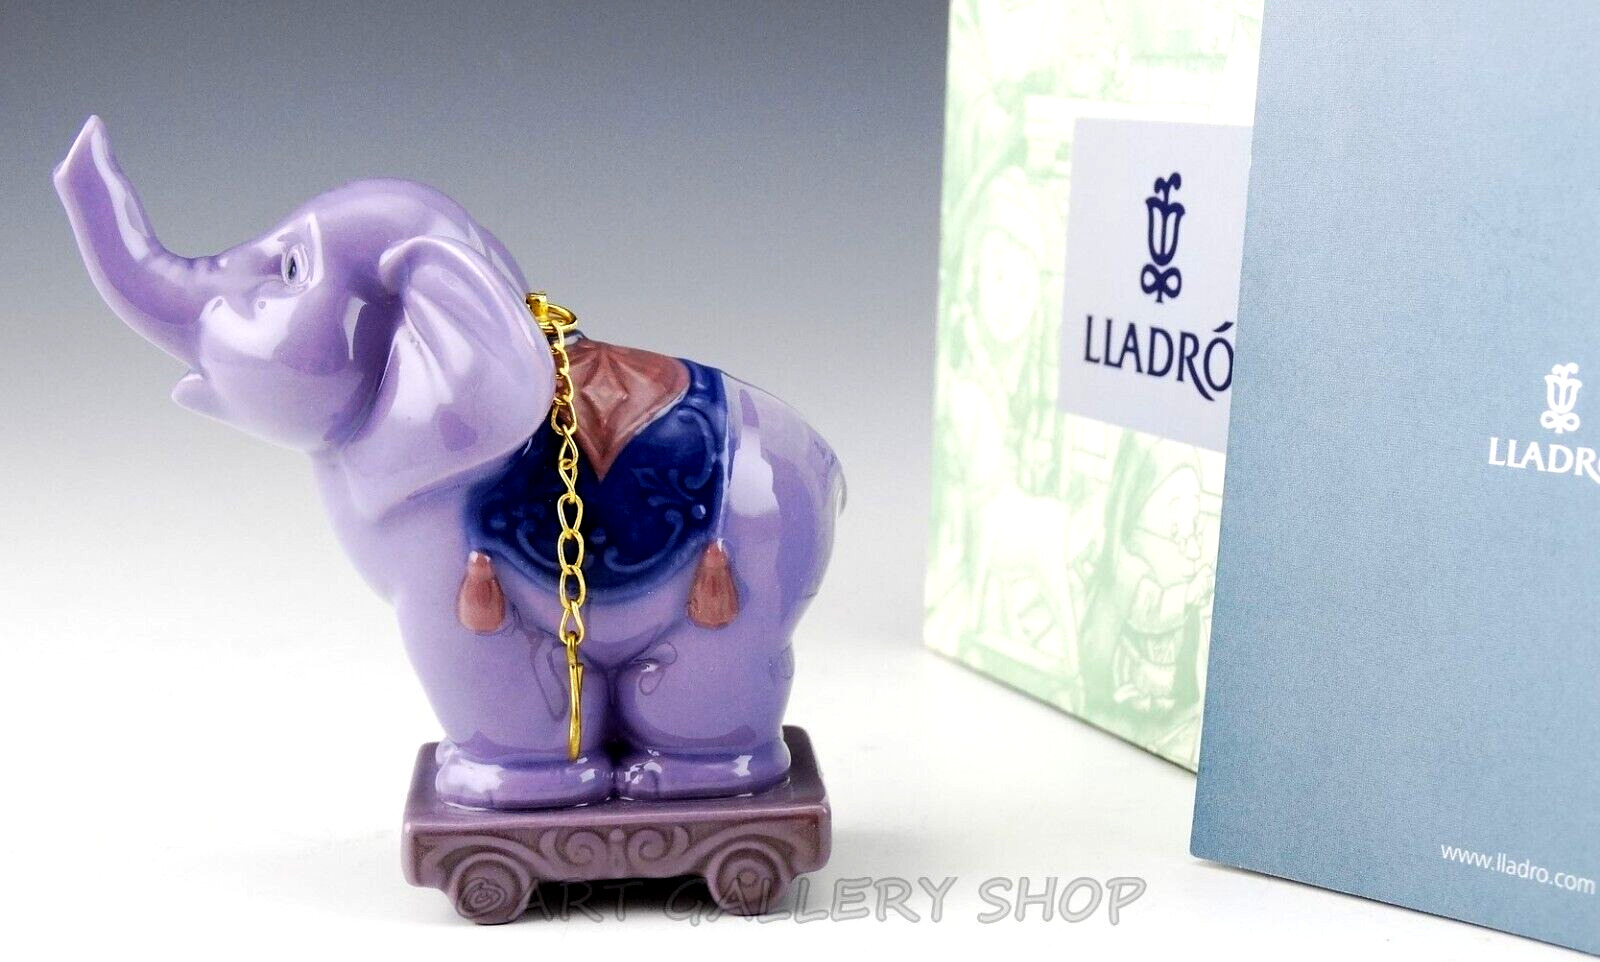 Lladro Figurine CHRISTMAS ORNAMENT CIRCUS STAR ELEPHANT #6388 Mint in Box